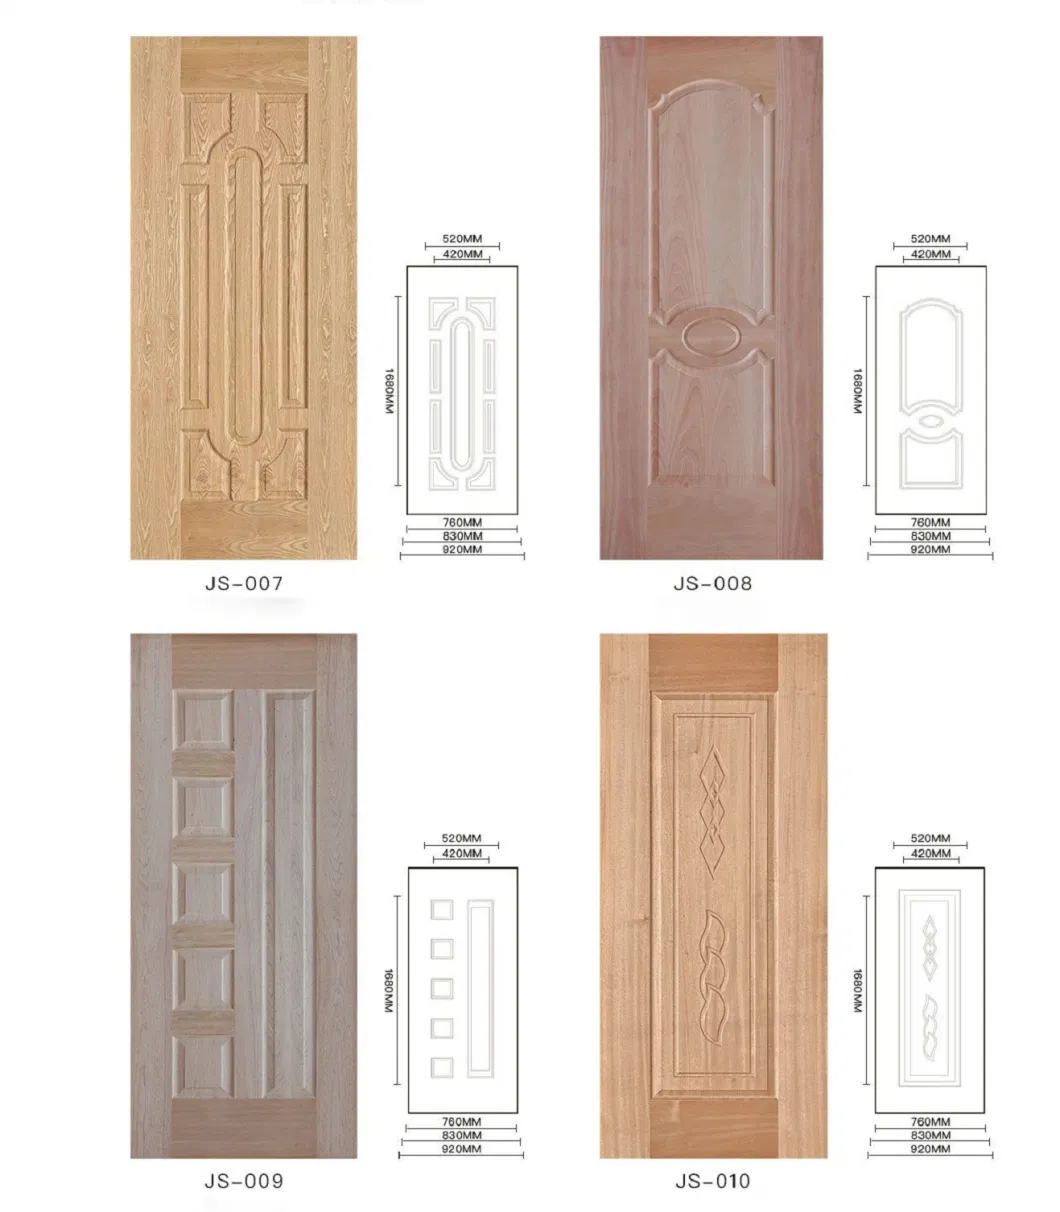 HDF Door Skins Fire Rated Flush Wood Designs with Luxury Swing Interior Door Modern Solid Wood